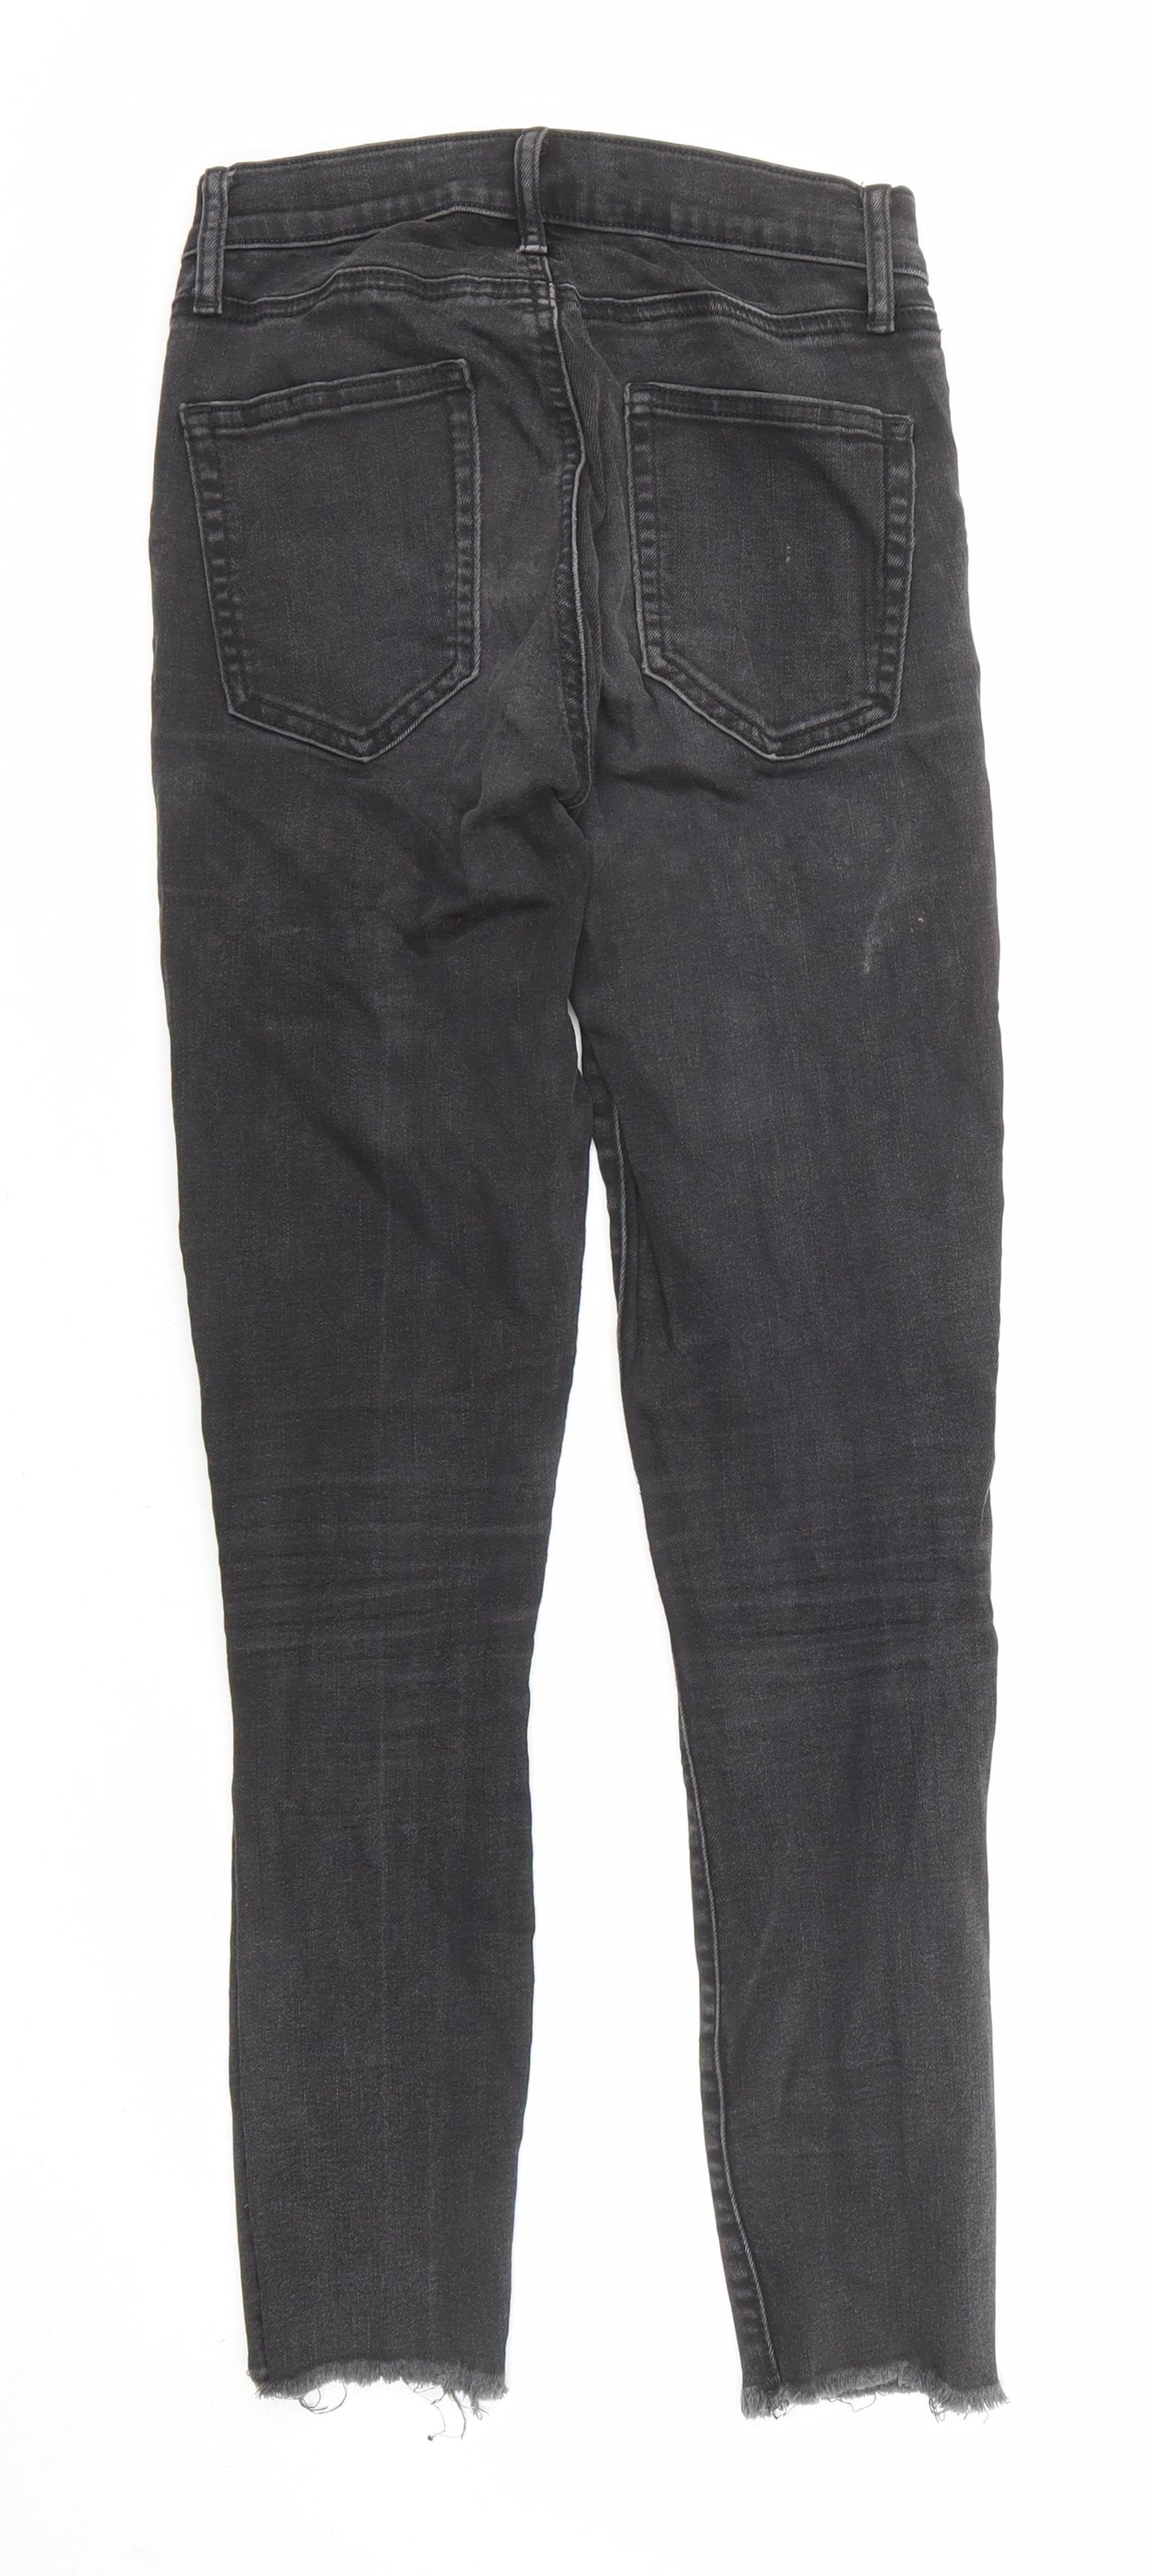 Gap Womens Black Cotton Skinny Jeans Size 25 in L27 in Regular Zip - Raw Hems